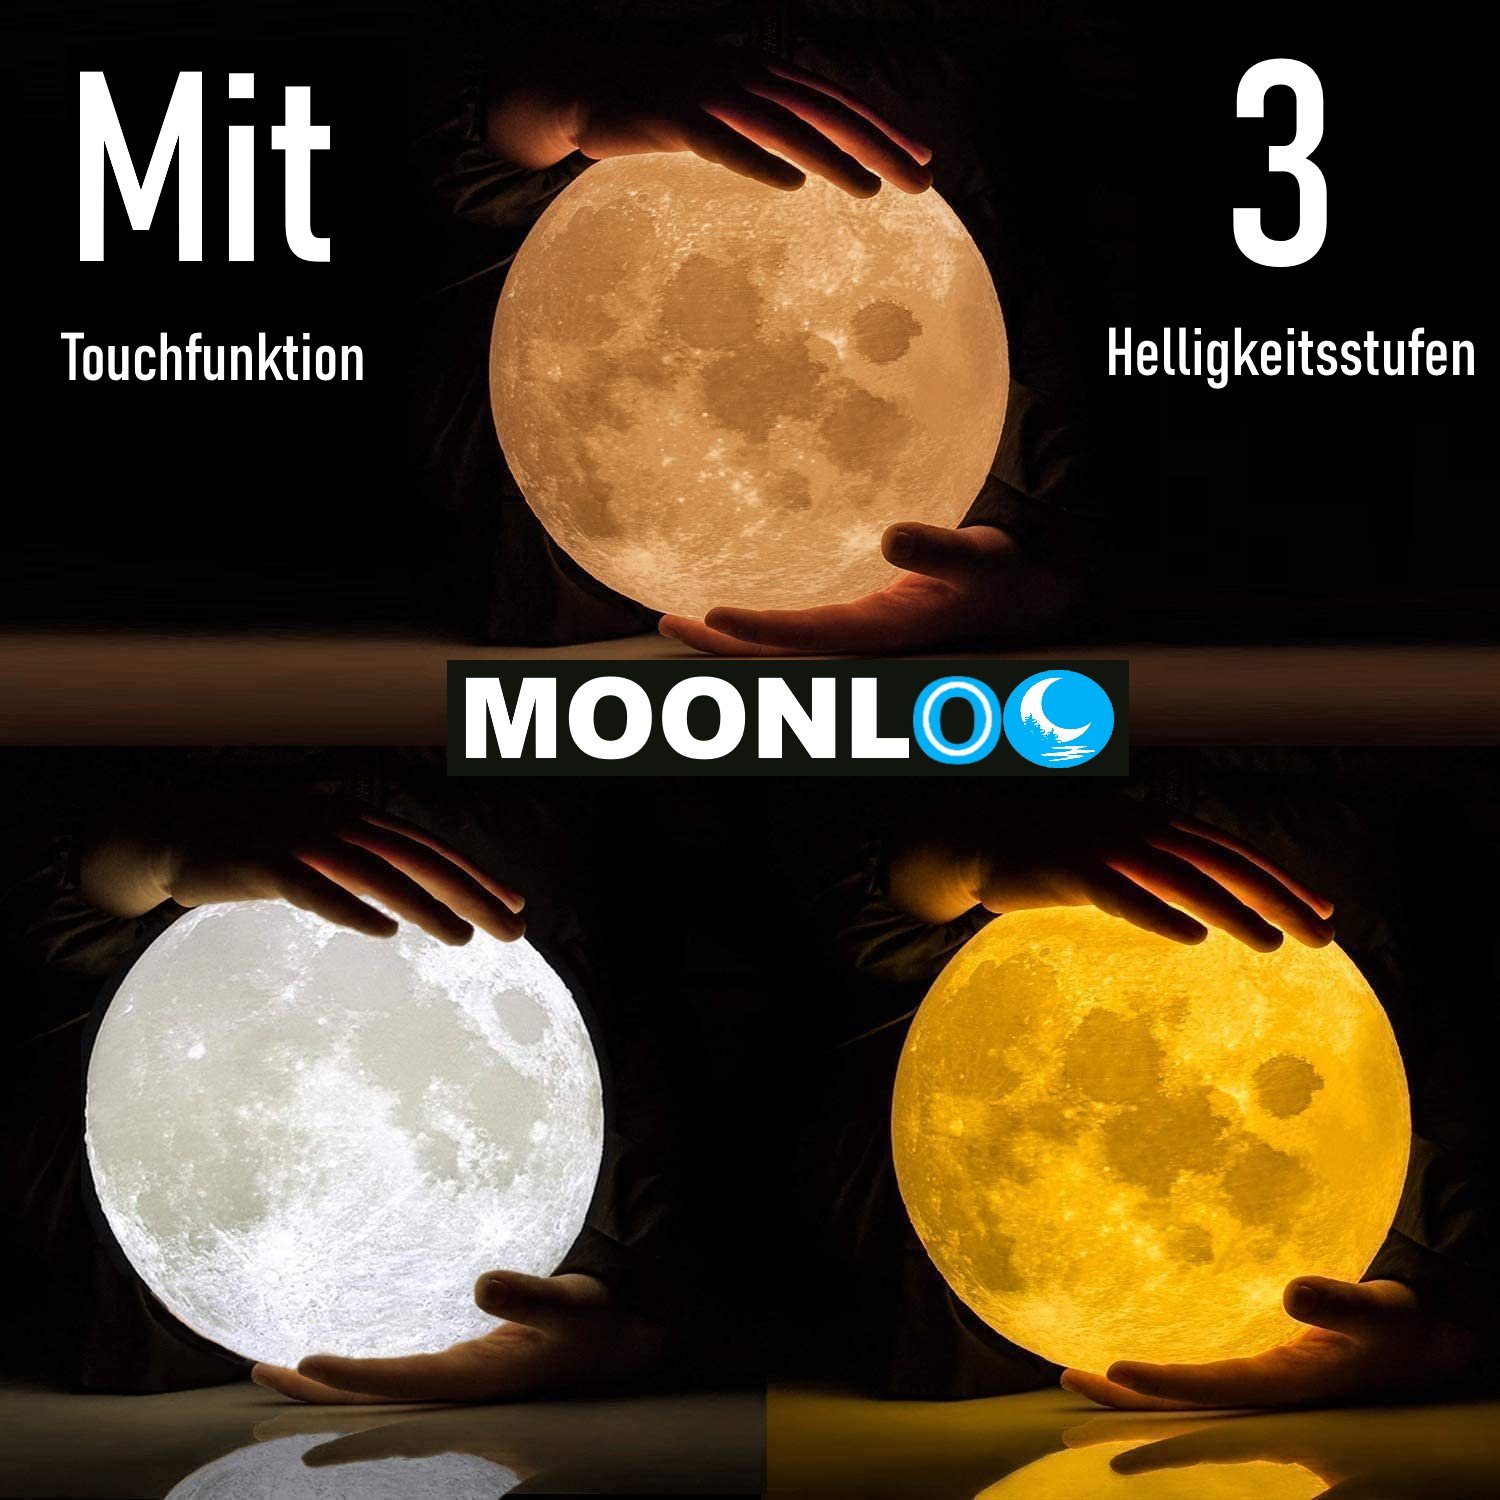 Light 3D MOONLOO Mondlicht Lampe Mond Licht, Nachtlampe Moon Sensor Touch Nachtlicht Nachttischlampe Mondlampe LED MAVURA